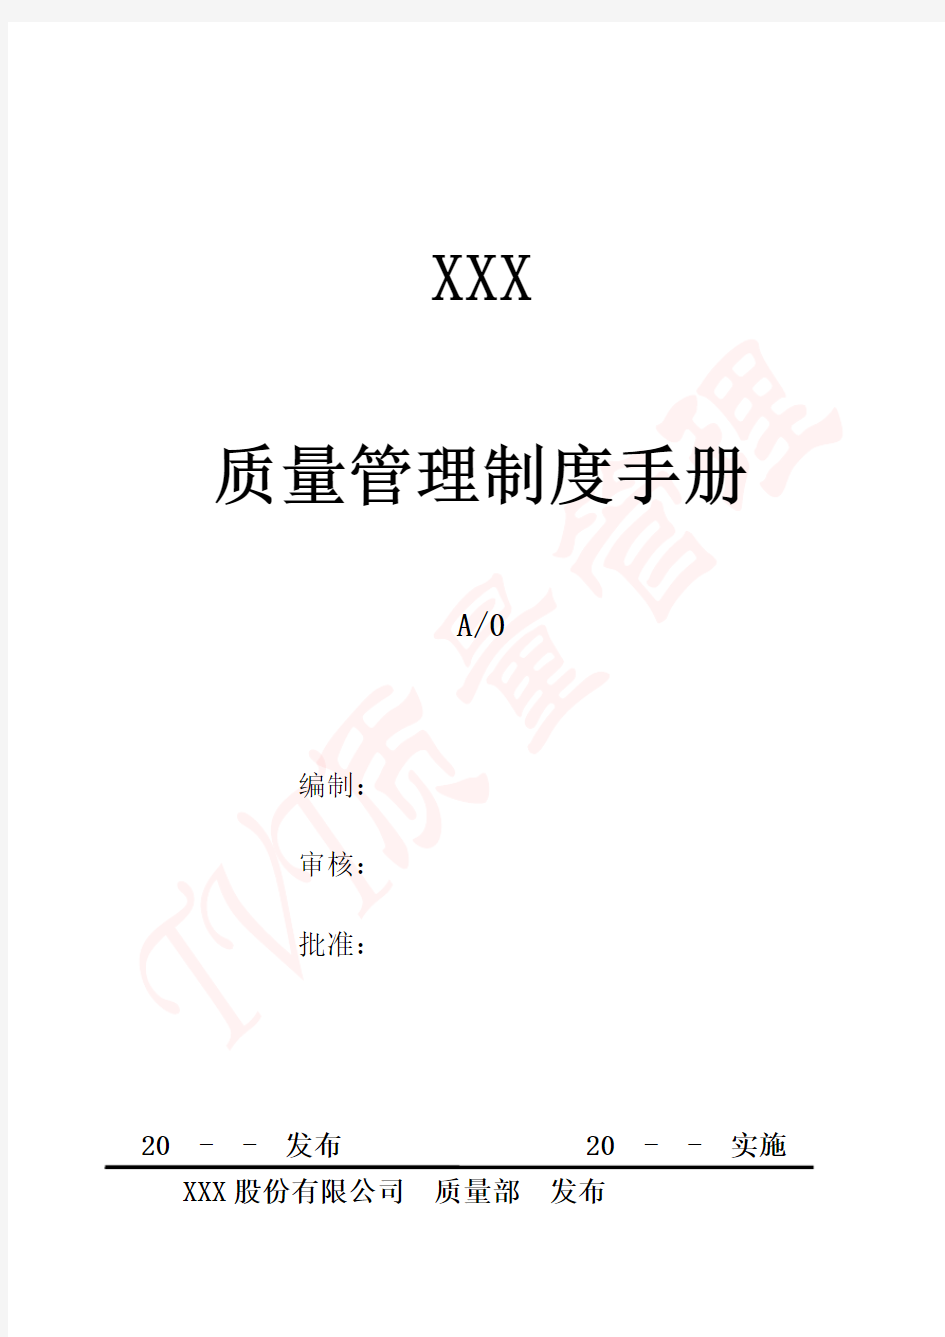 XXX科技公司质量管理制度手册